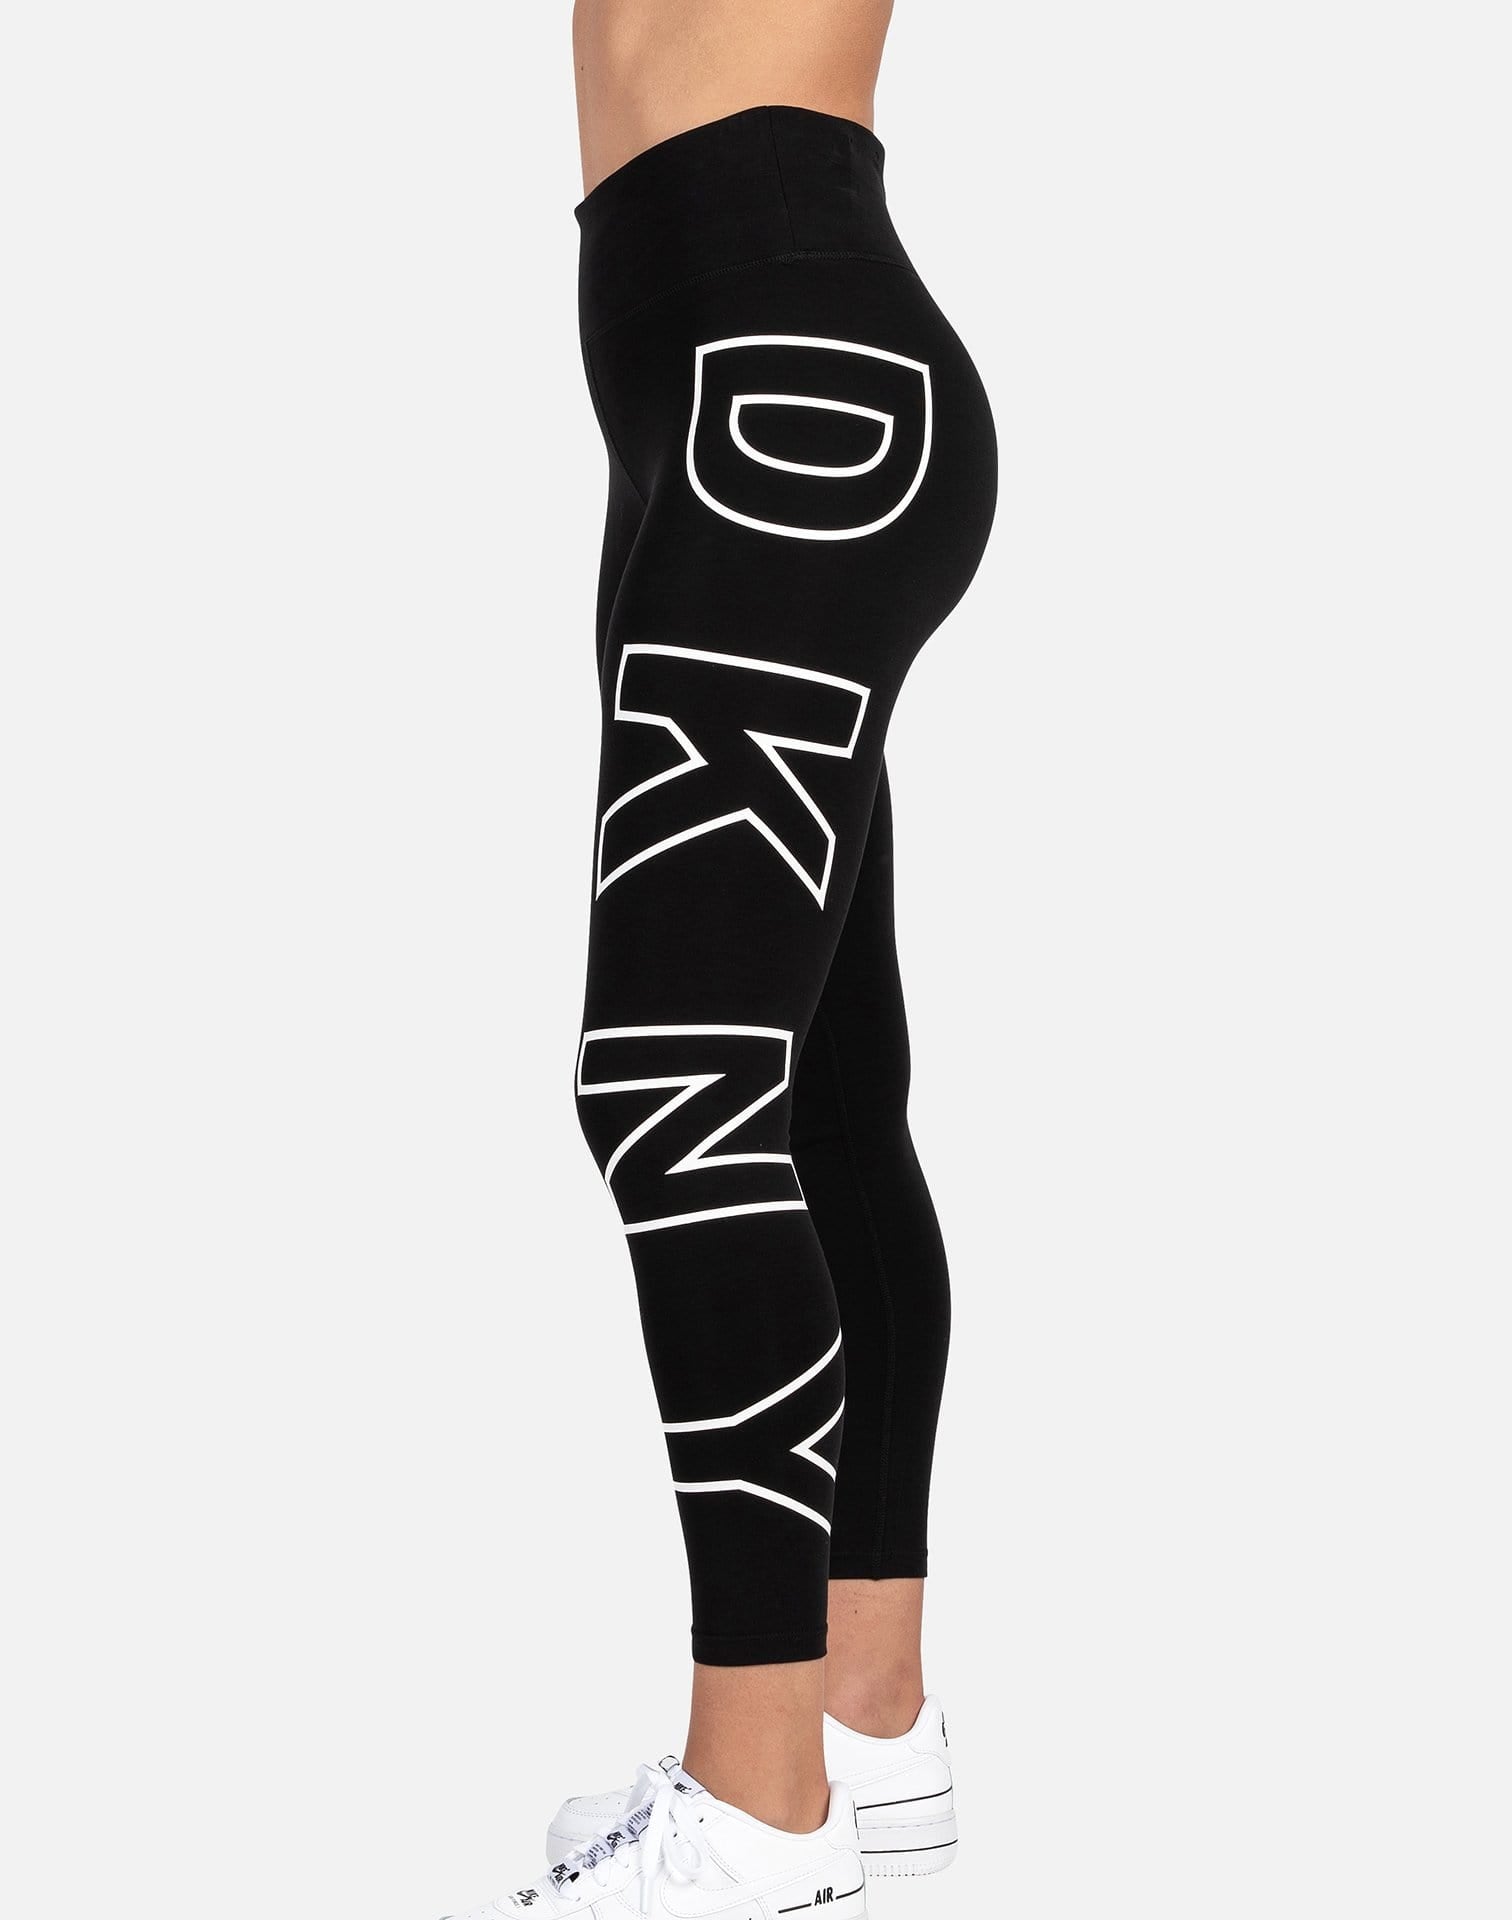 DKNY Logo-Waistband Leggings, Ivory, Medium - Discount Scrubs and